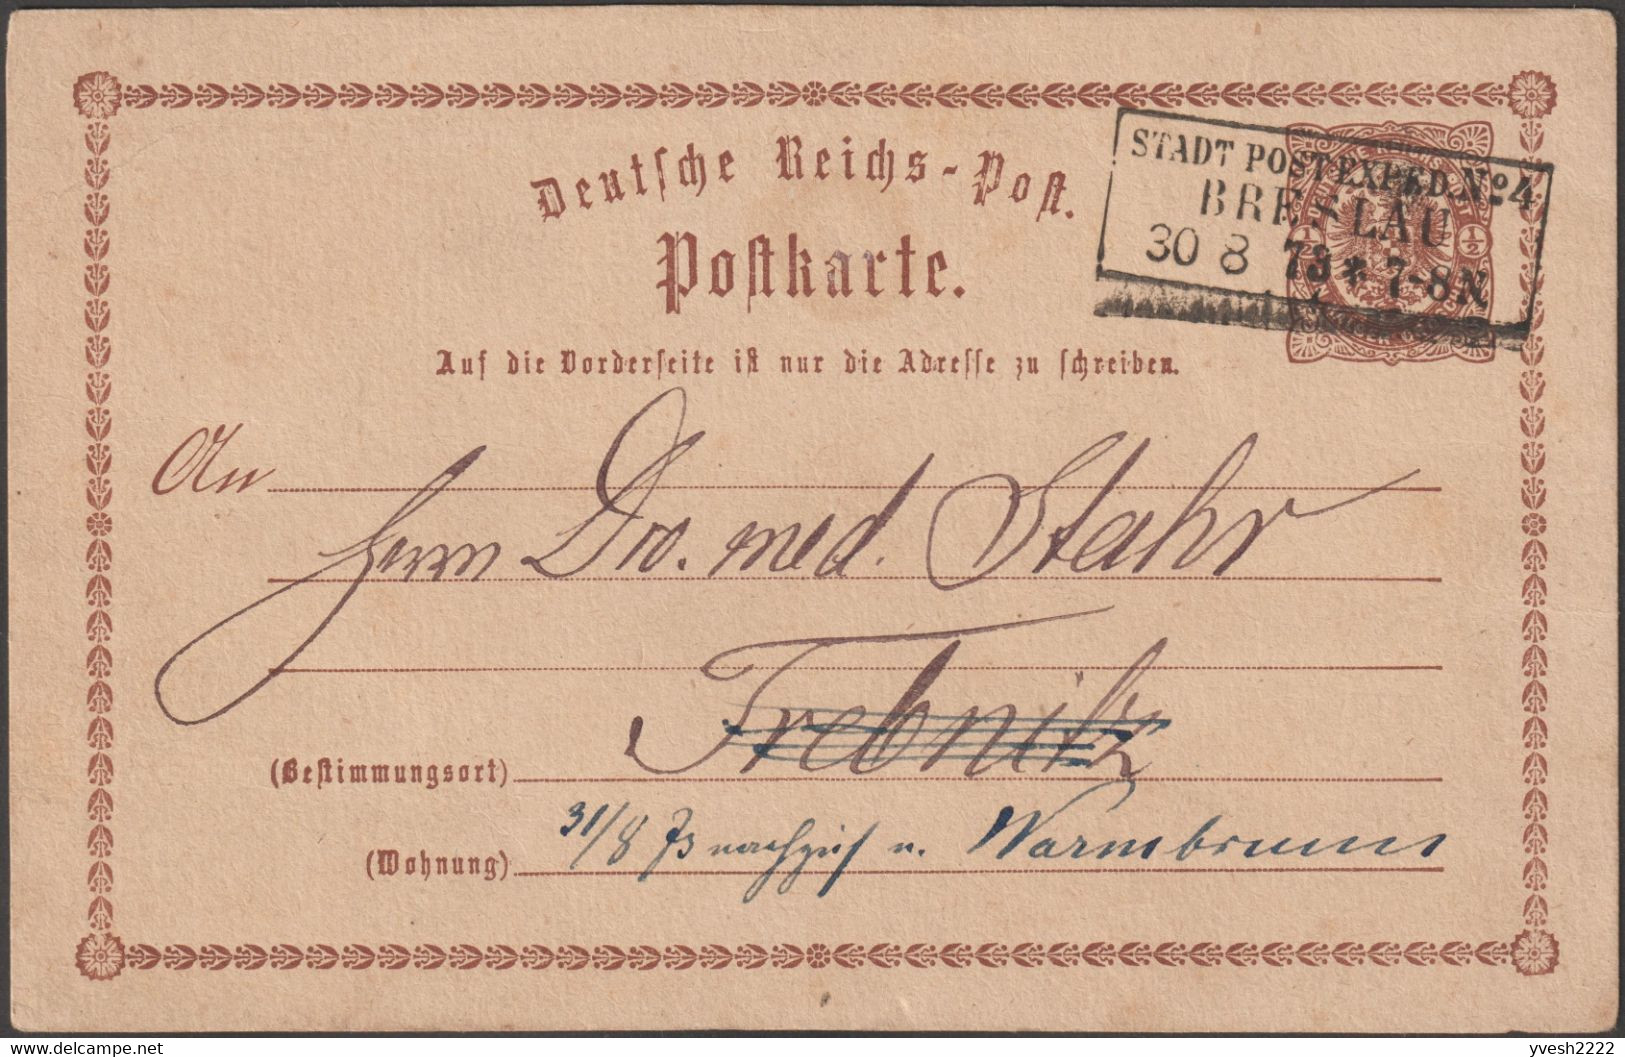 Pologne / Allemagne 1873. Entier Postal Oblitéré Stadt Post Exped. N° 4 - Breslau 30 8 73  7-8 N  Wrocław - Maschinenstempel (EMA)